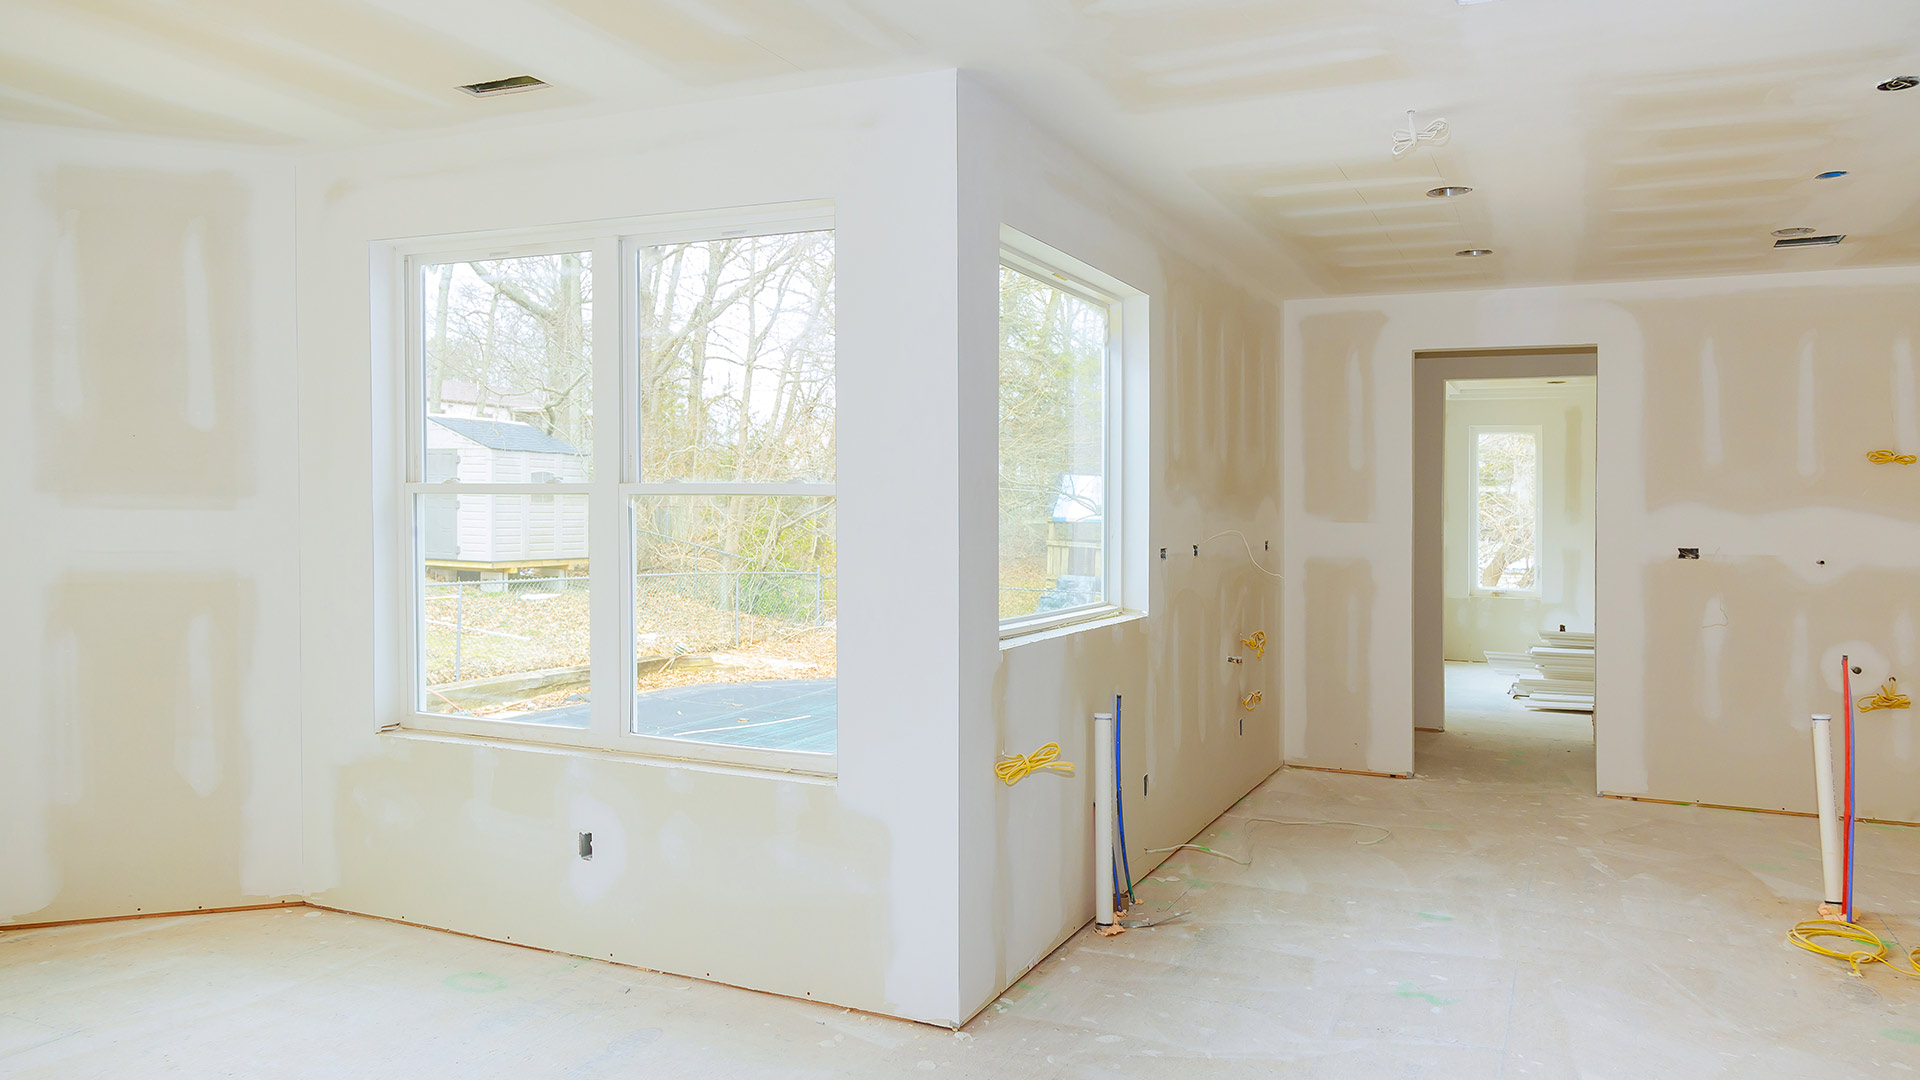 interior of new home build in progress lincoln ne full width